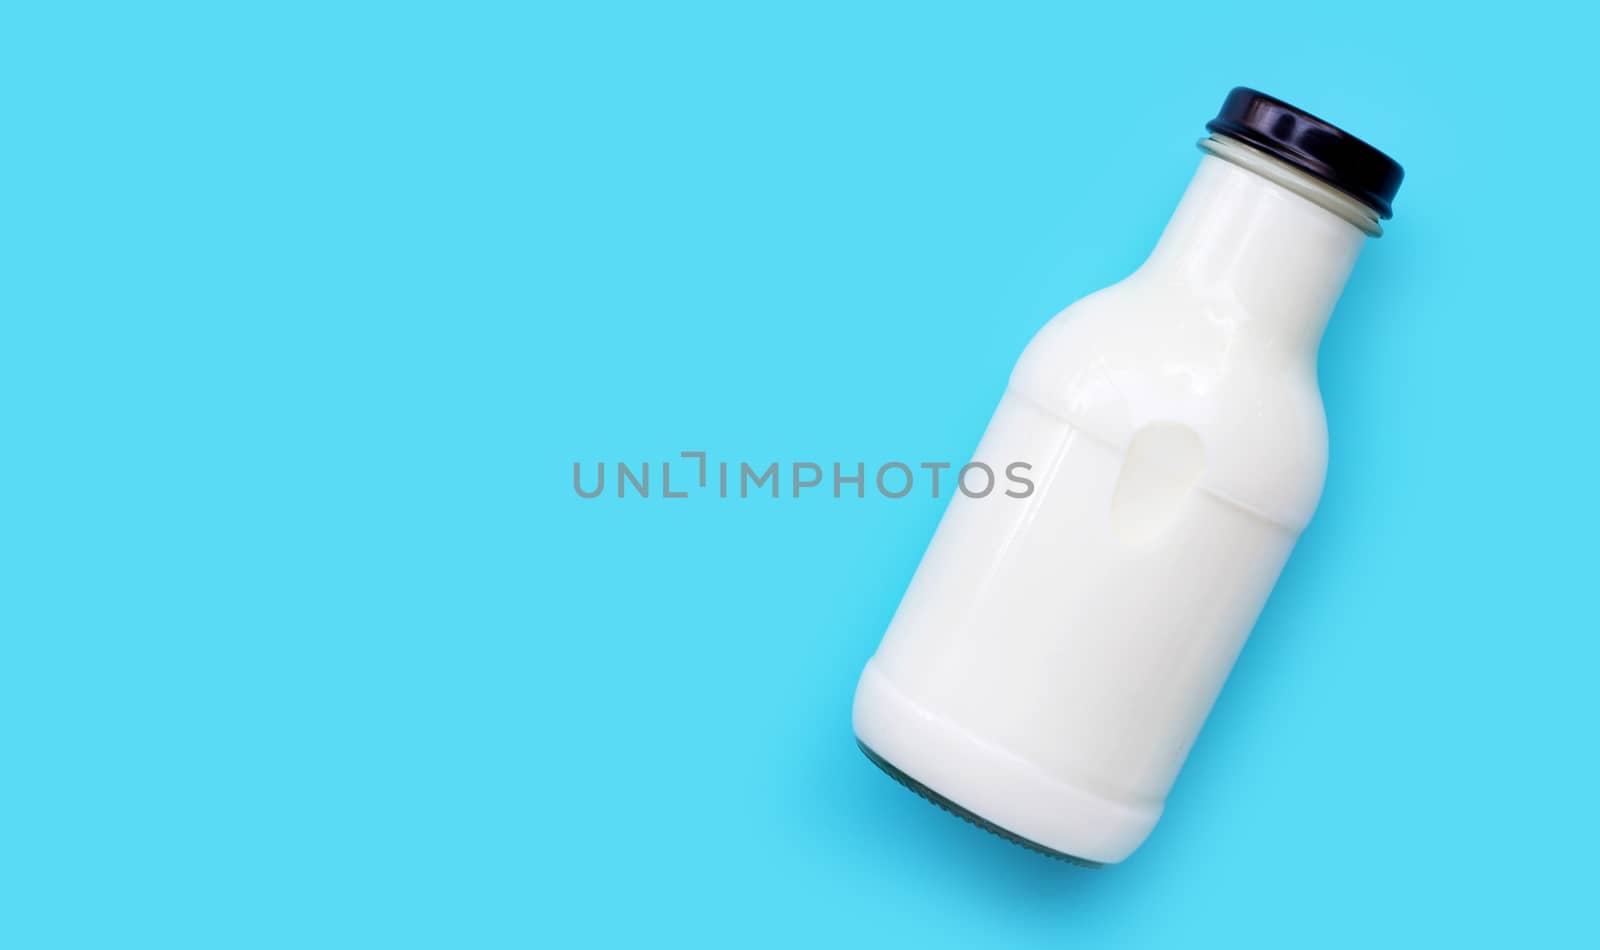 Milk bottle on blue background. Copy space